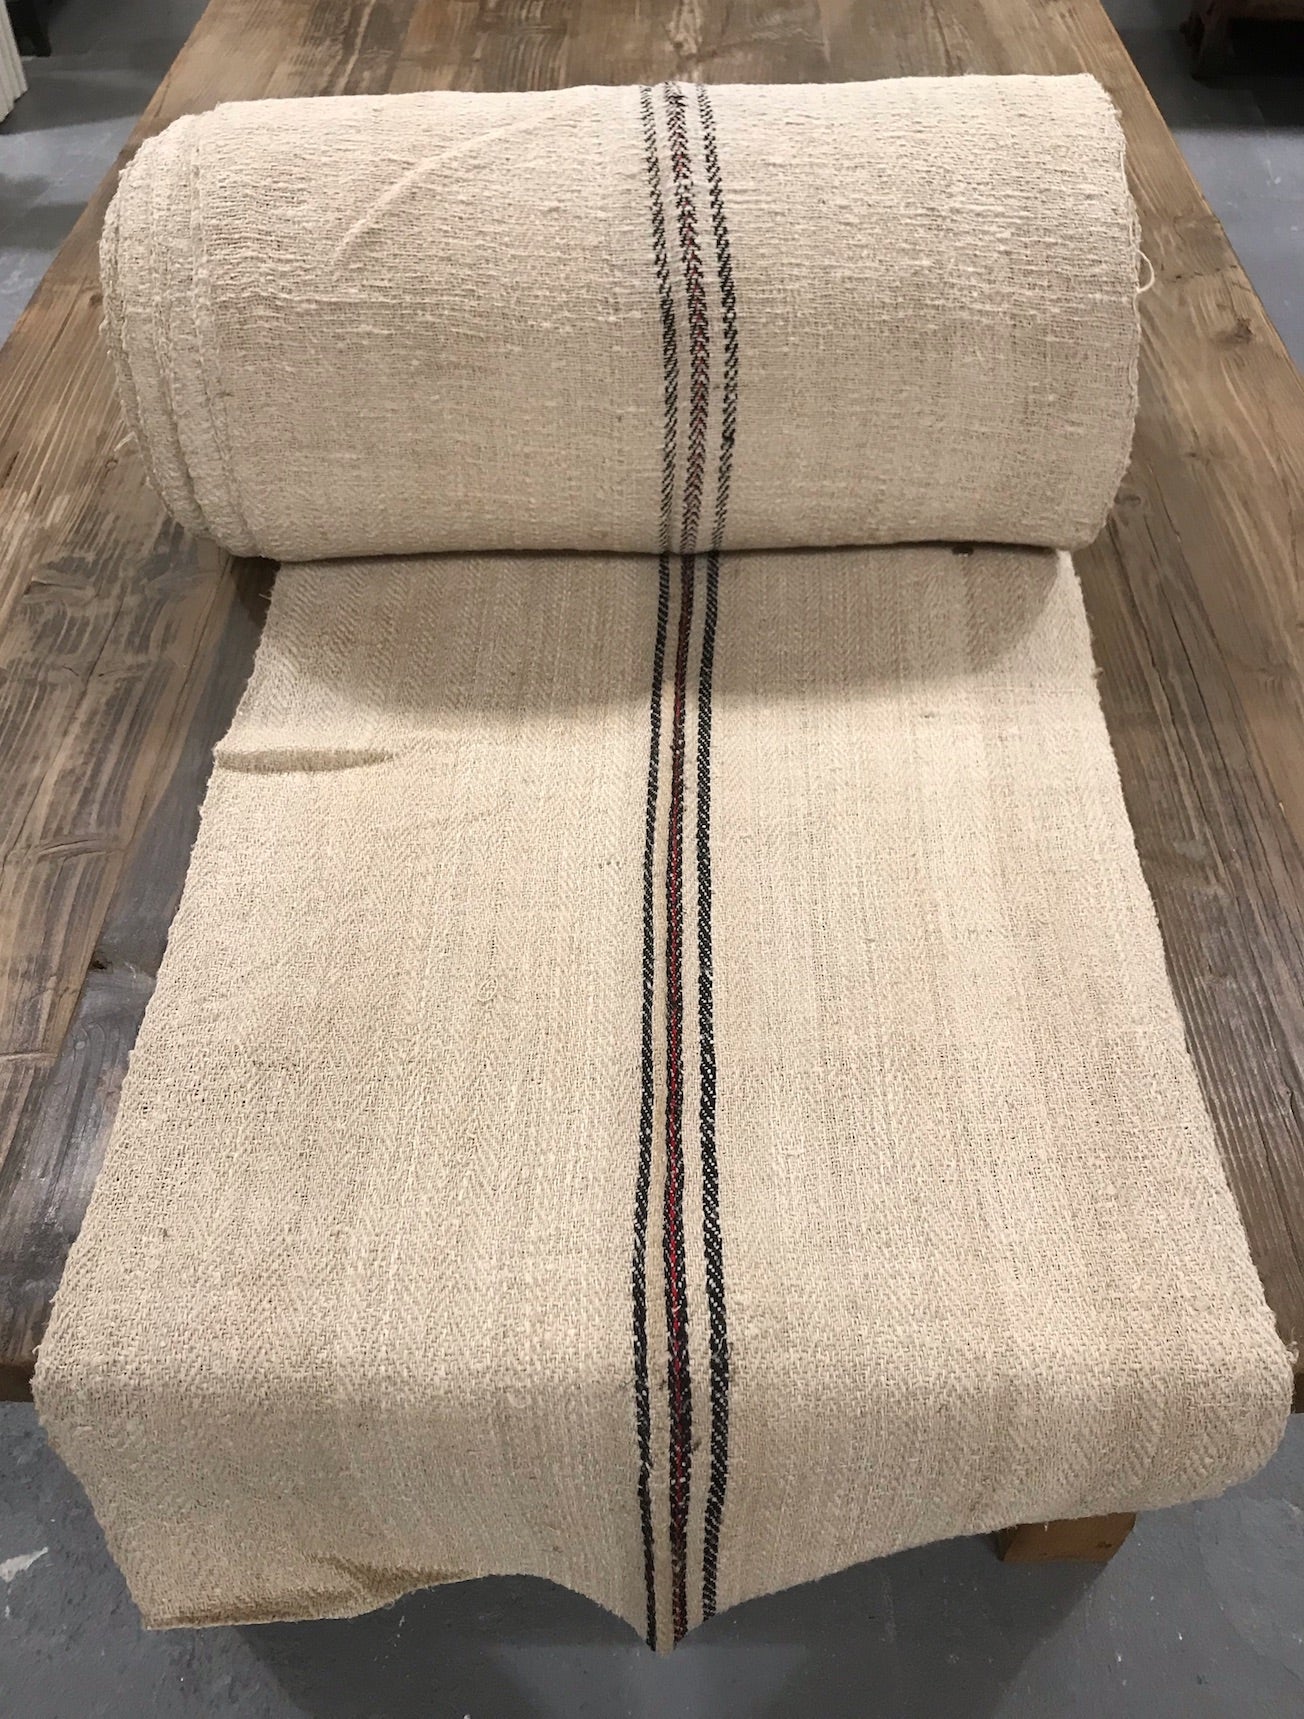 Vintage  Linen/Hemp Grain Sack Material  1940s  #3652L  (Read Information About This Item)